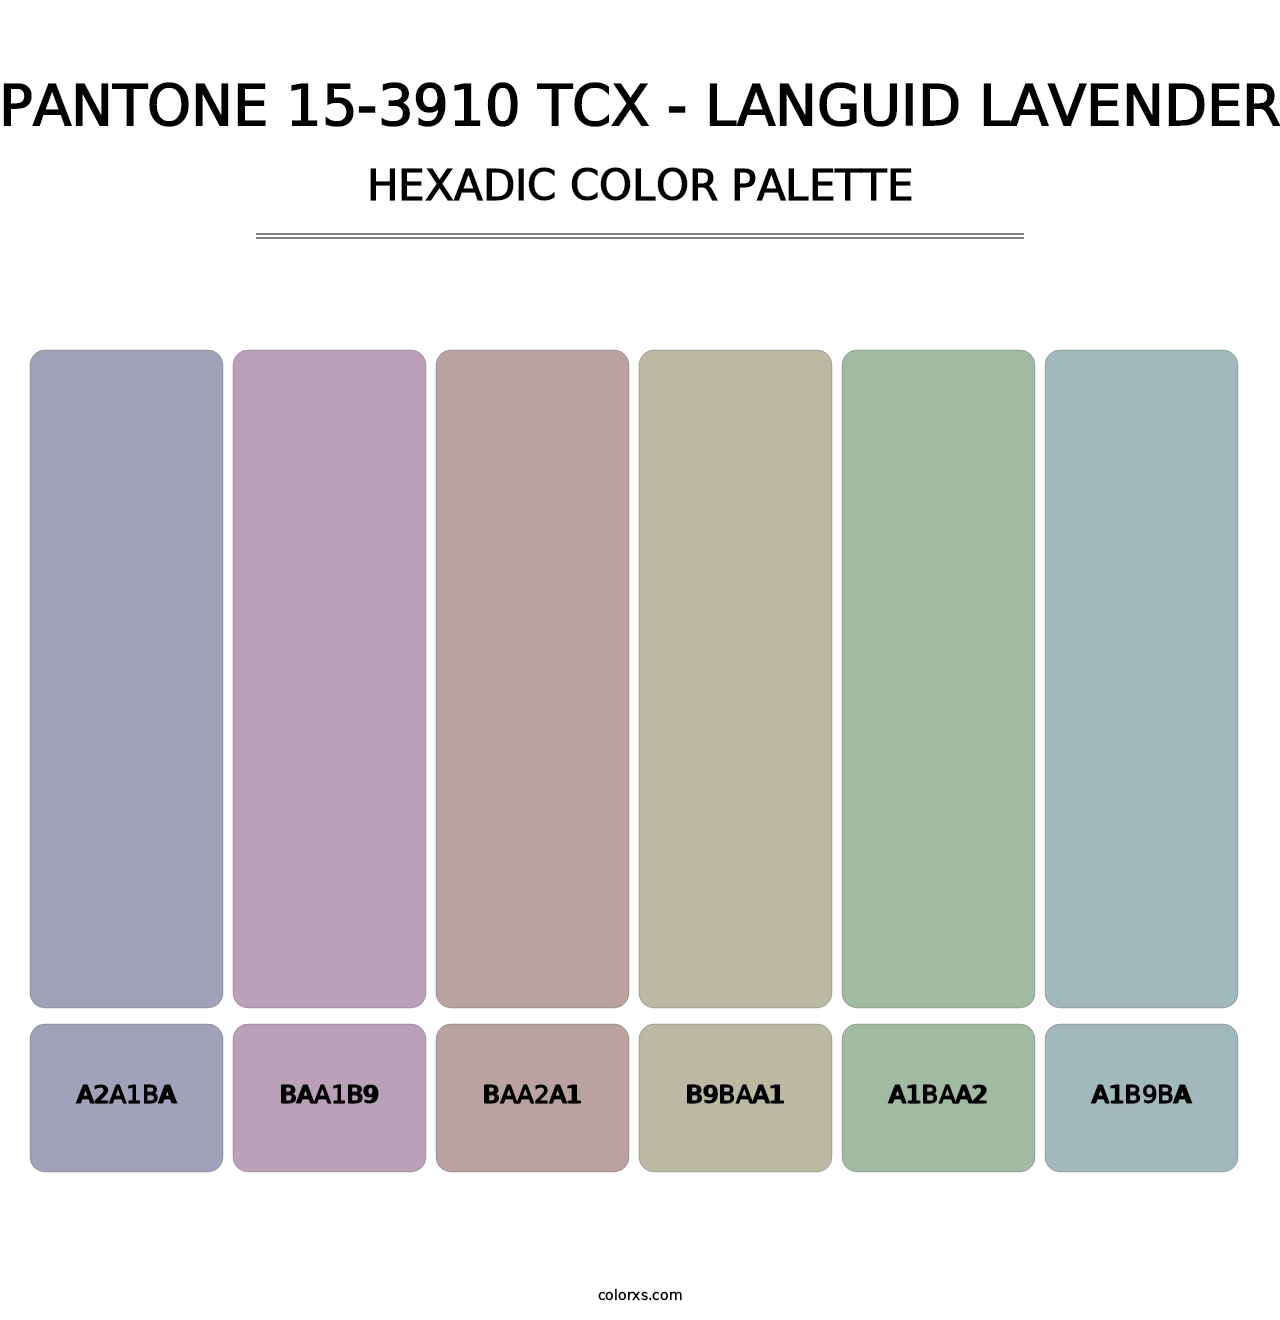 PANTONE 15-3910 TCX - Languid Lavender - Hexadic Color Palette